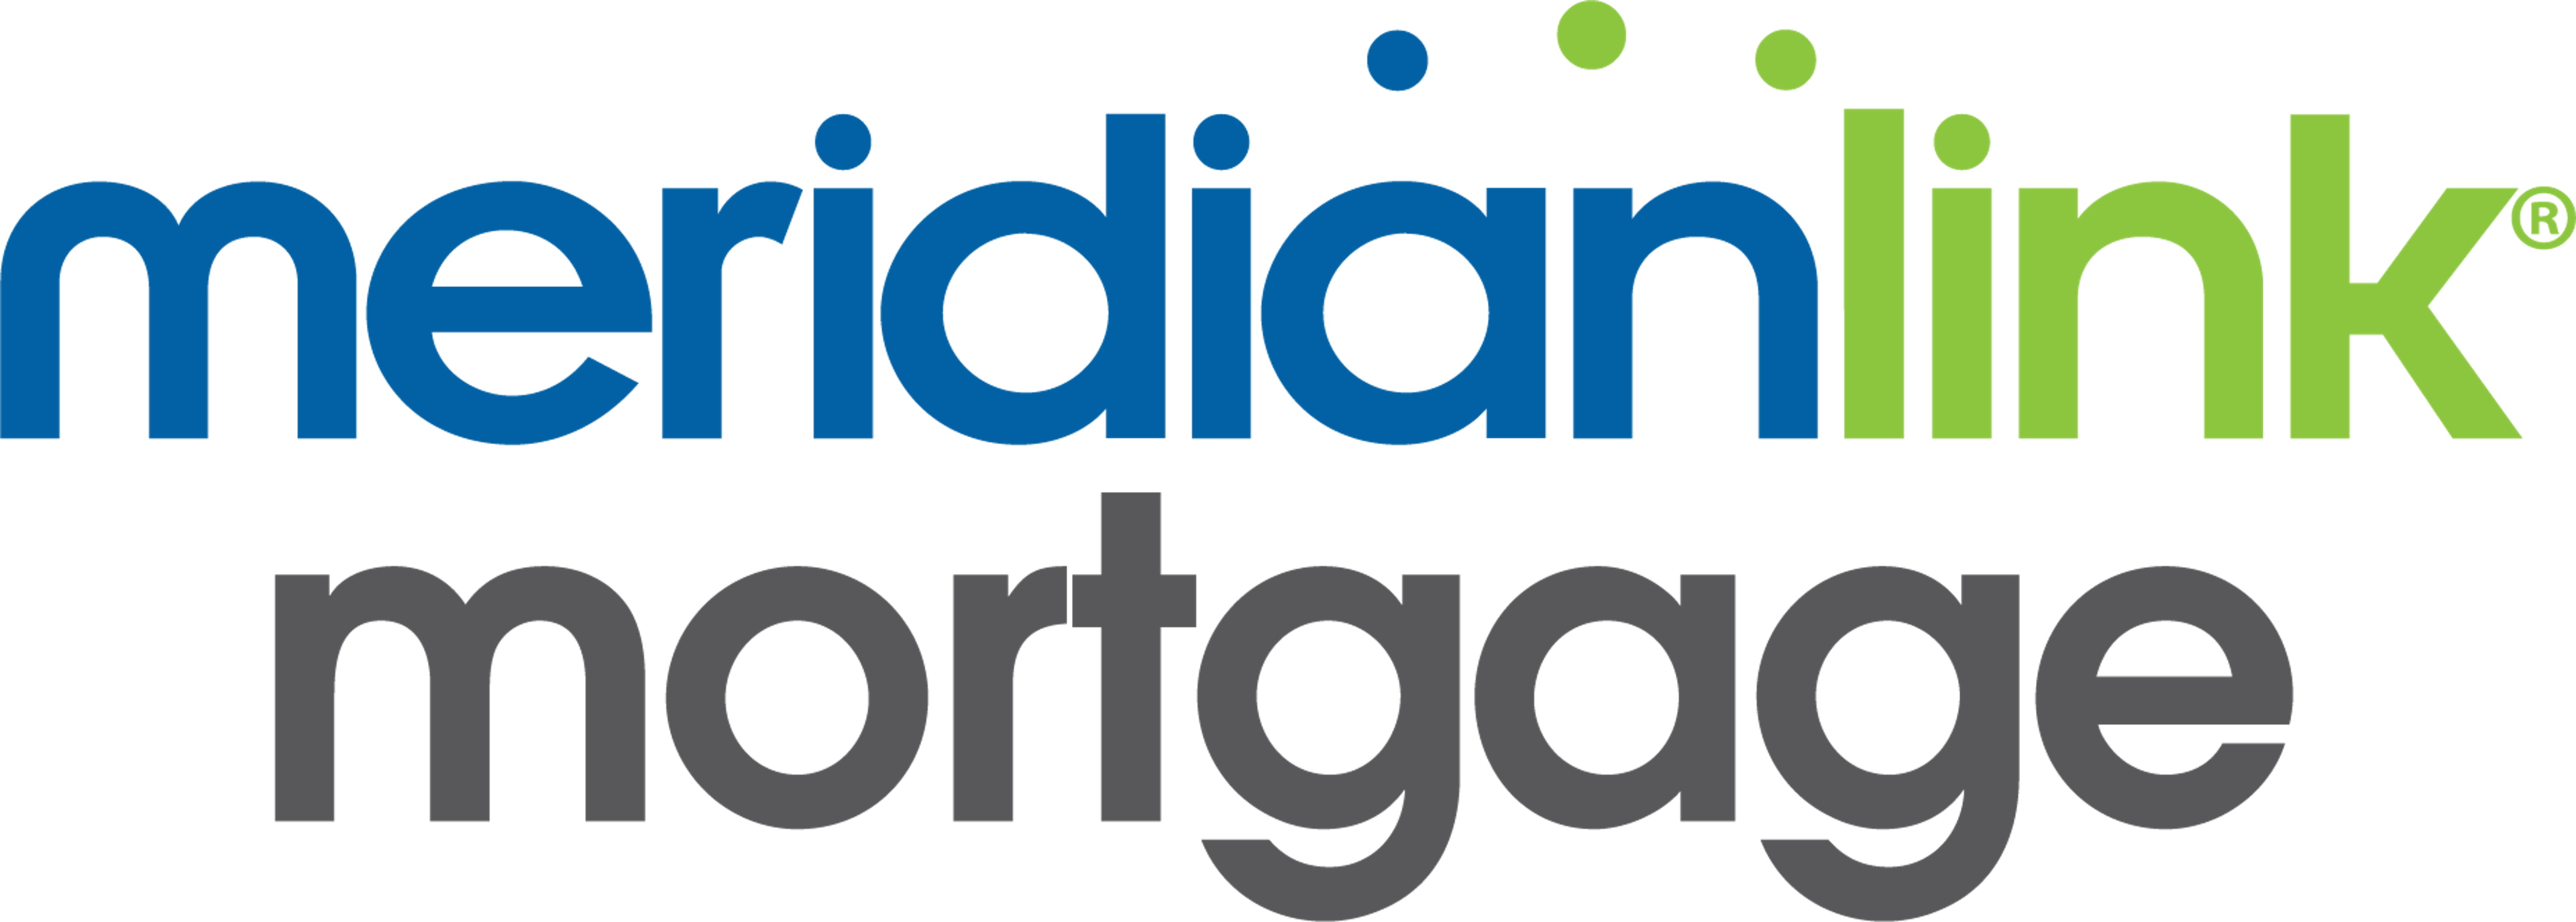 MeridianLink Mortgage Logo